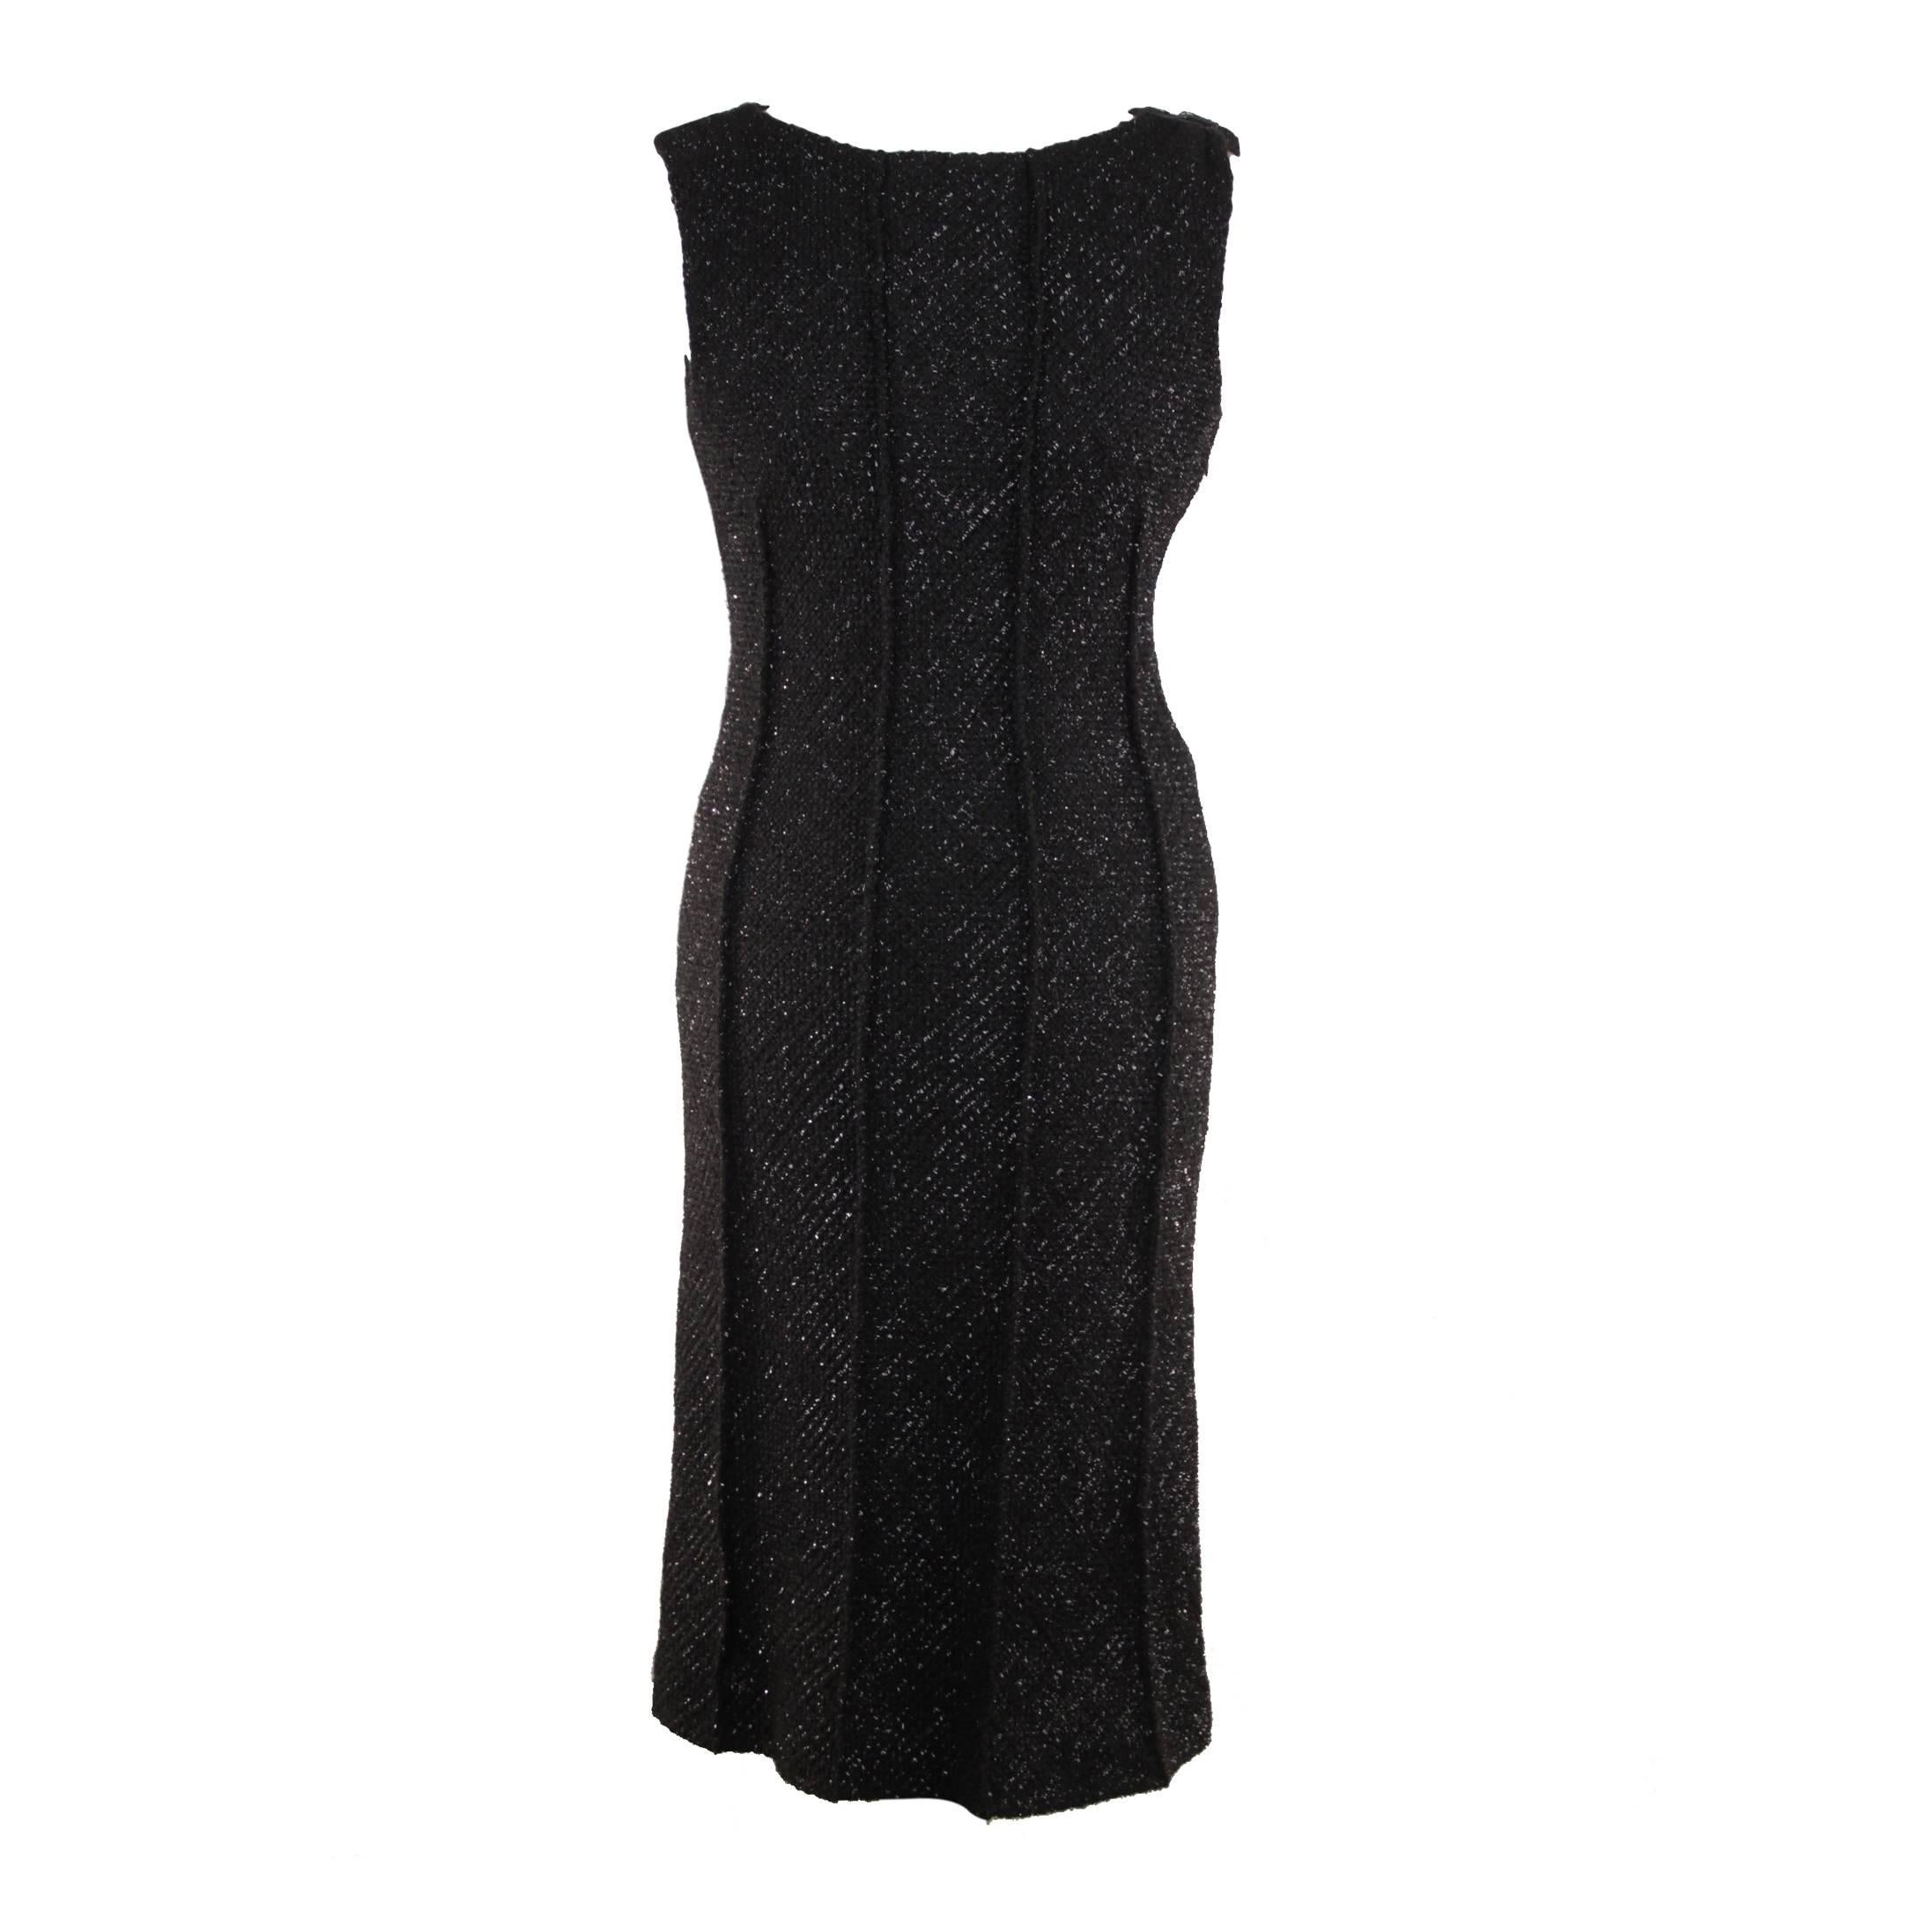 ALBERTA FERRETTI Italian Boucle Tweed LITTLE BLACK DRESS Sleeveless Sz 44 IT